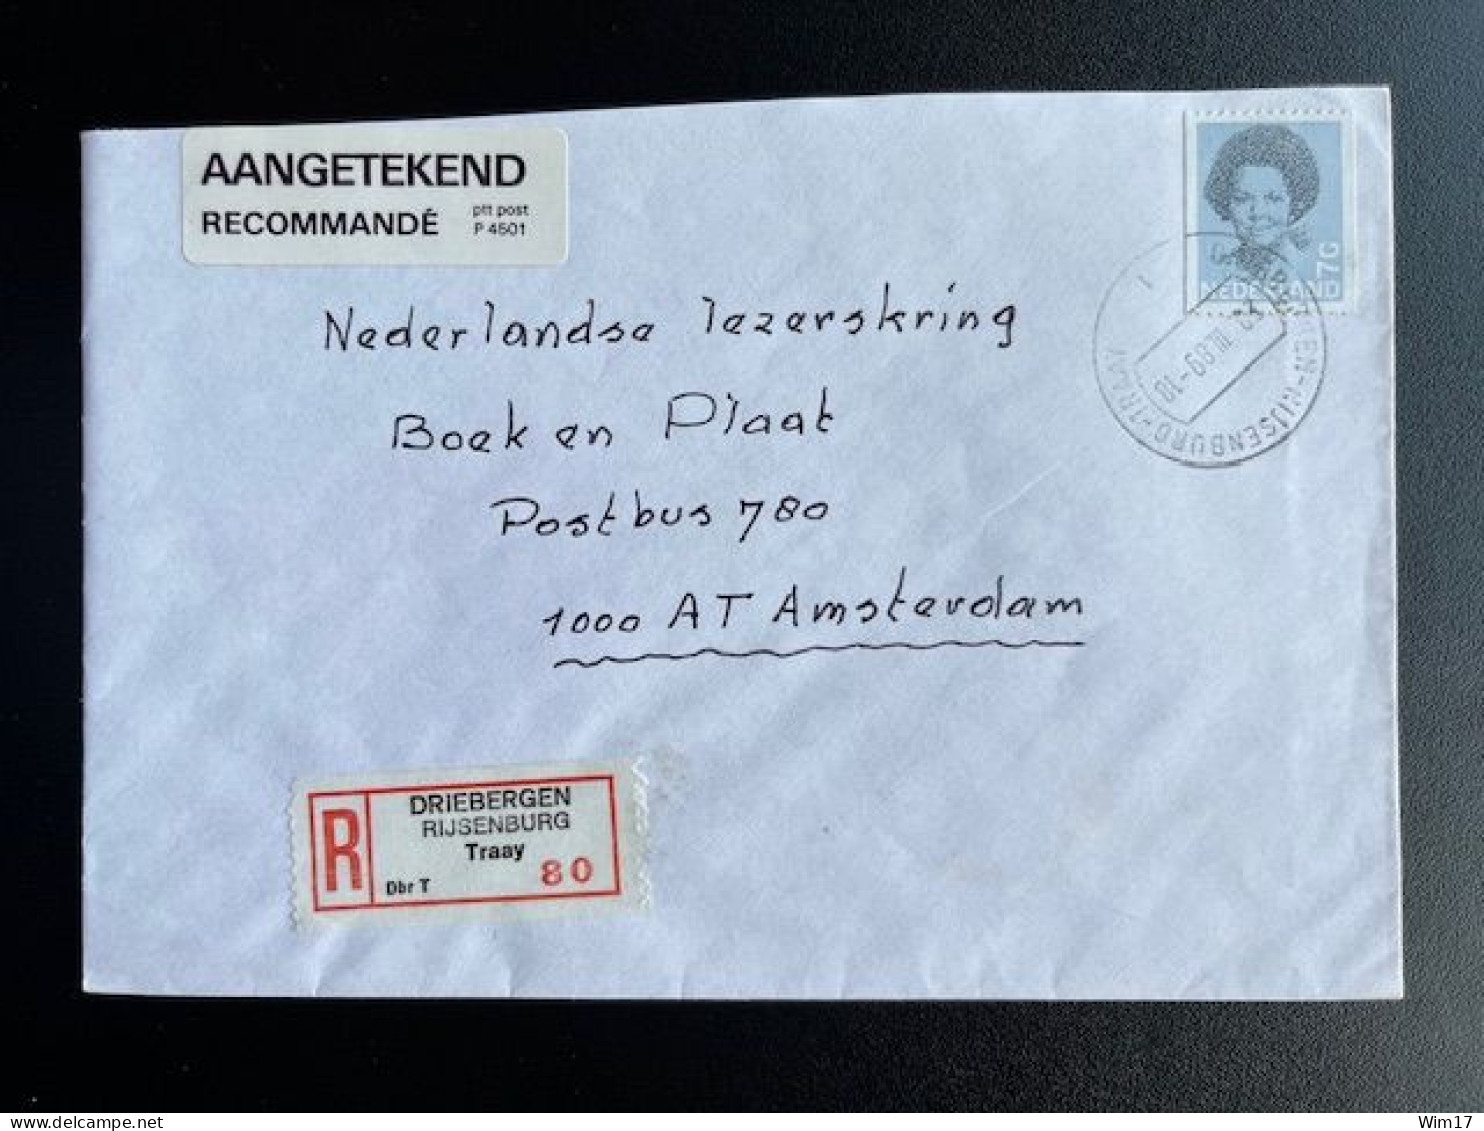 NETHERLANDS 1989 REGISTERED LETTER DRIEBERGEN RIJSENBURG TRAAY TO AMSTERDAM 28-03-1989 NEDERLAND AANGETEKEND - Briefe U. Dokumente